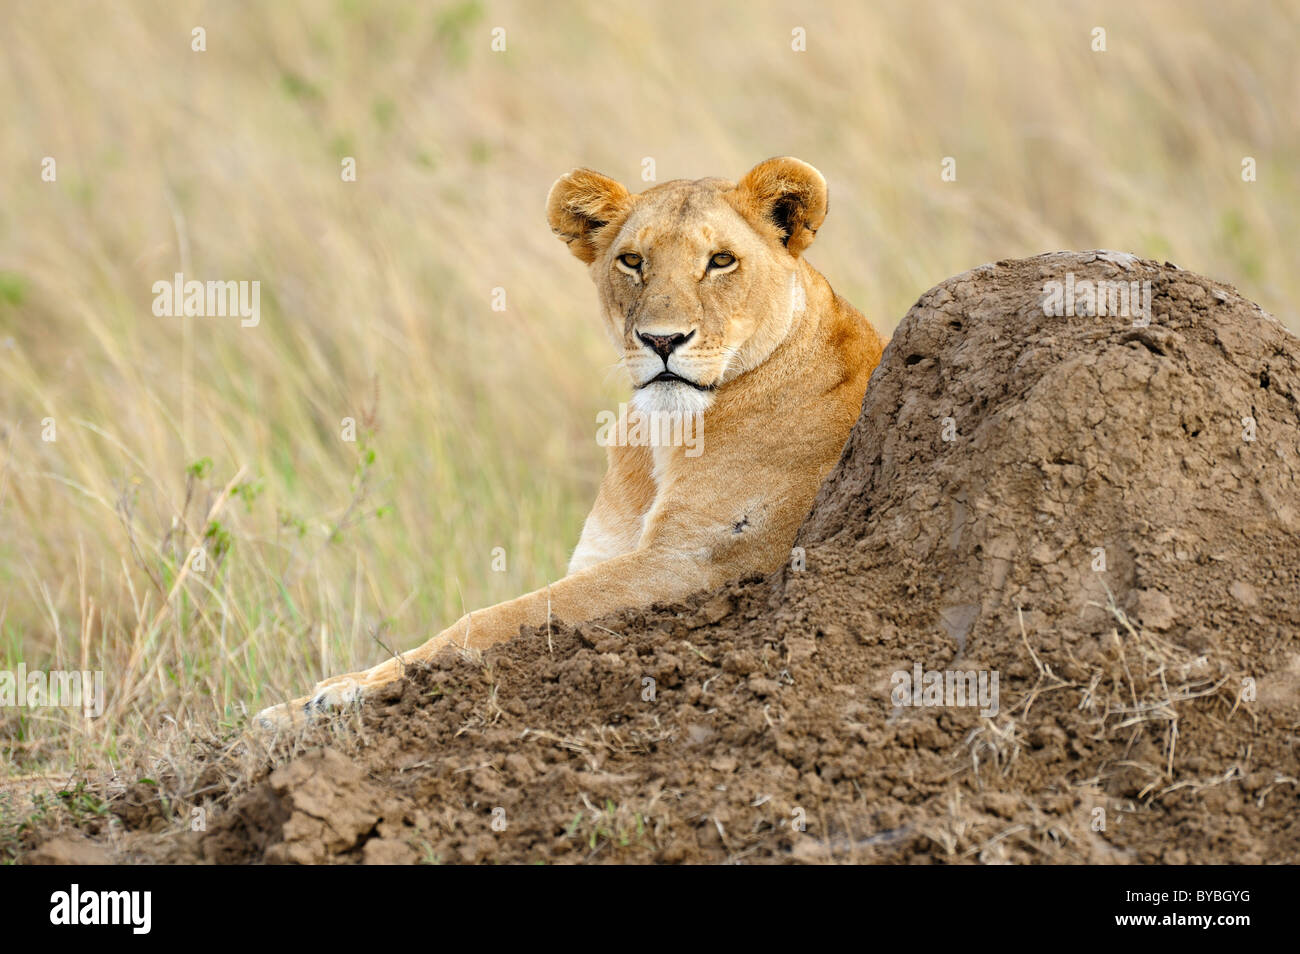 León (Panthera leo), hembra descansando en un termitero, Reserva Nacional de Masai Mara, Kenya, Africa. Foto de stock